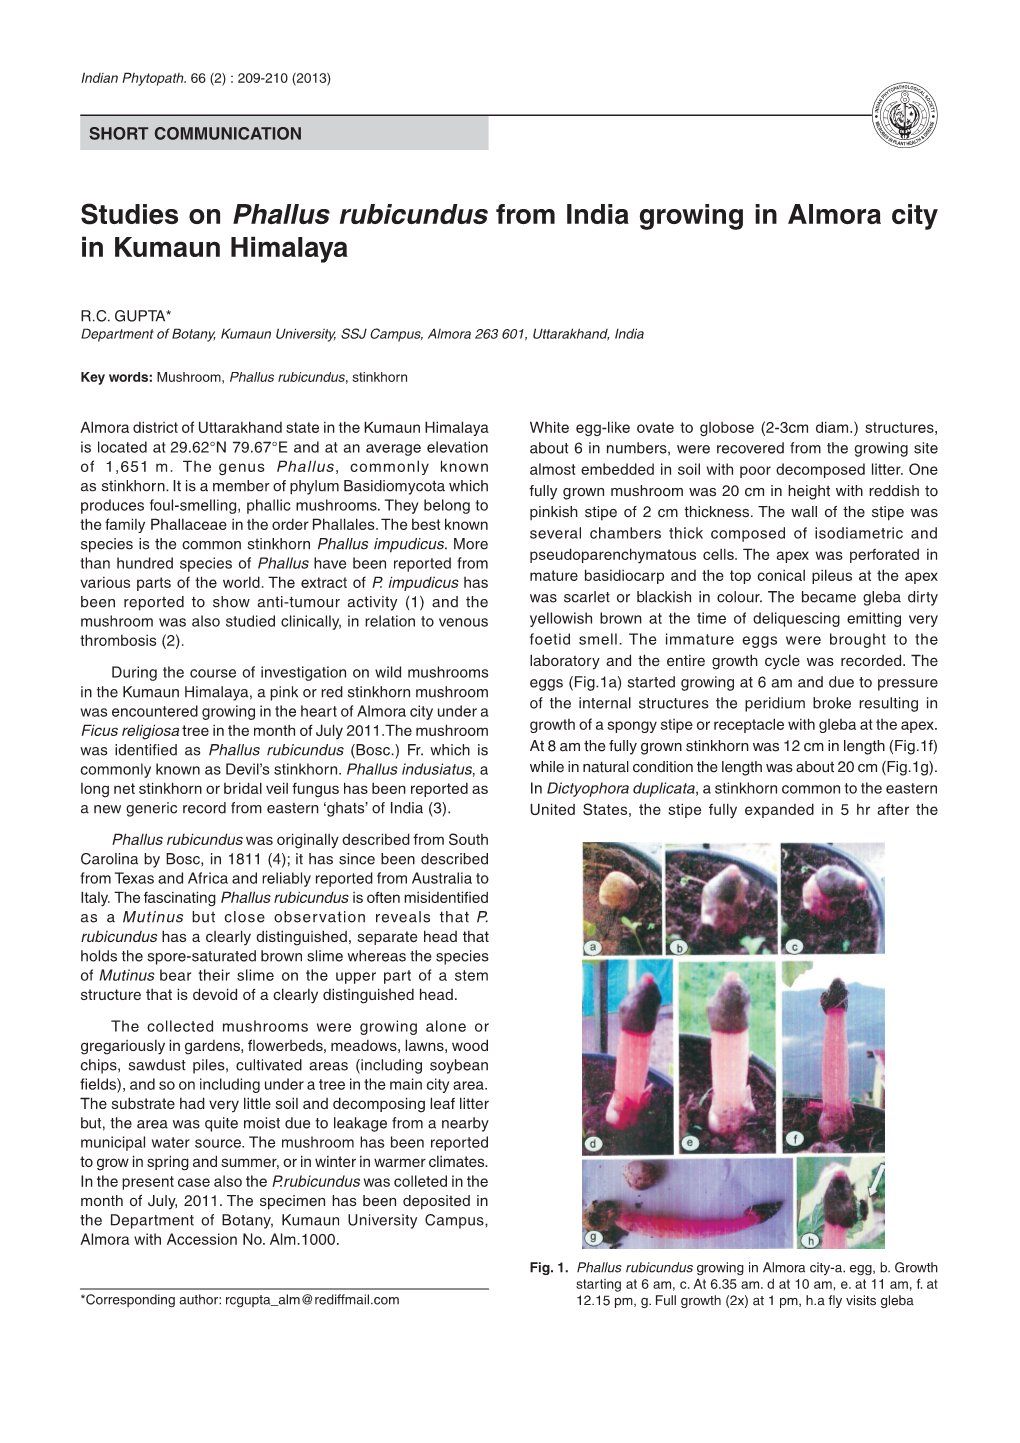 Studies on Phallus Rubicundus from India Growing in Almora City in Kumaun Himalaya